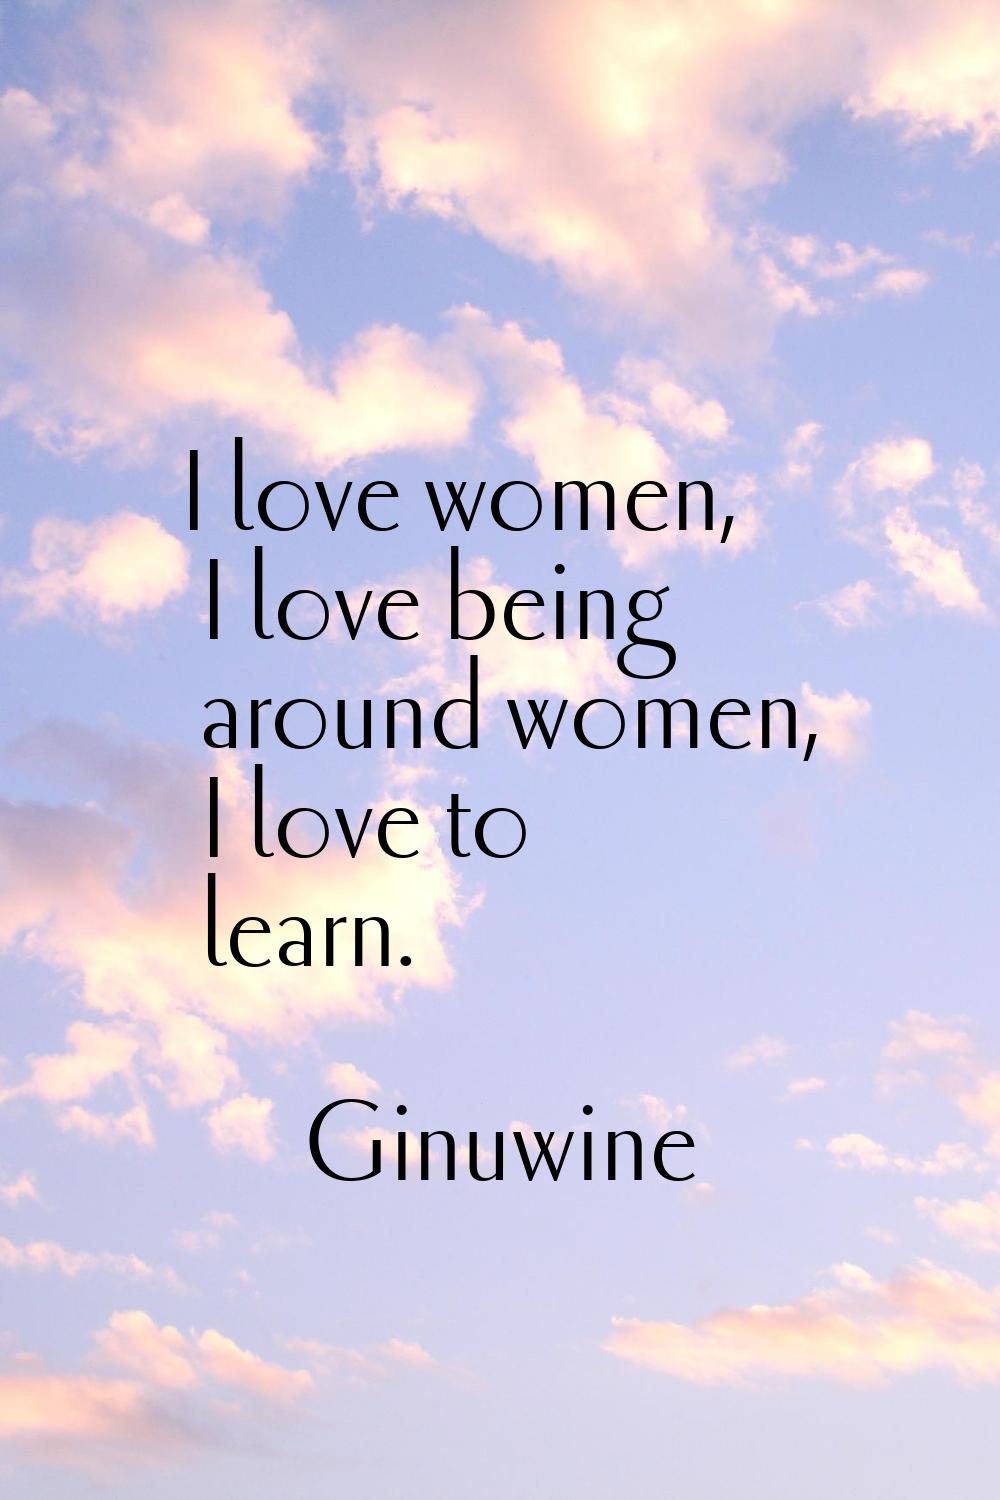 I love women, I love being around women, I love to learn.